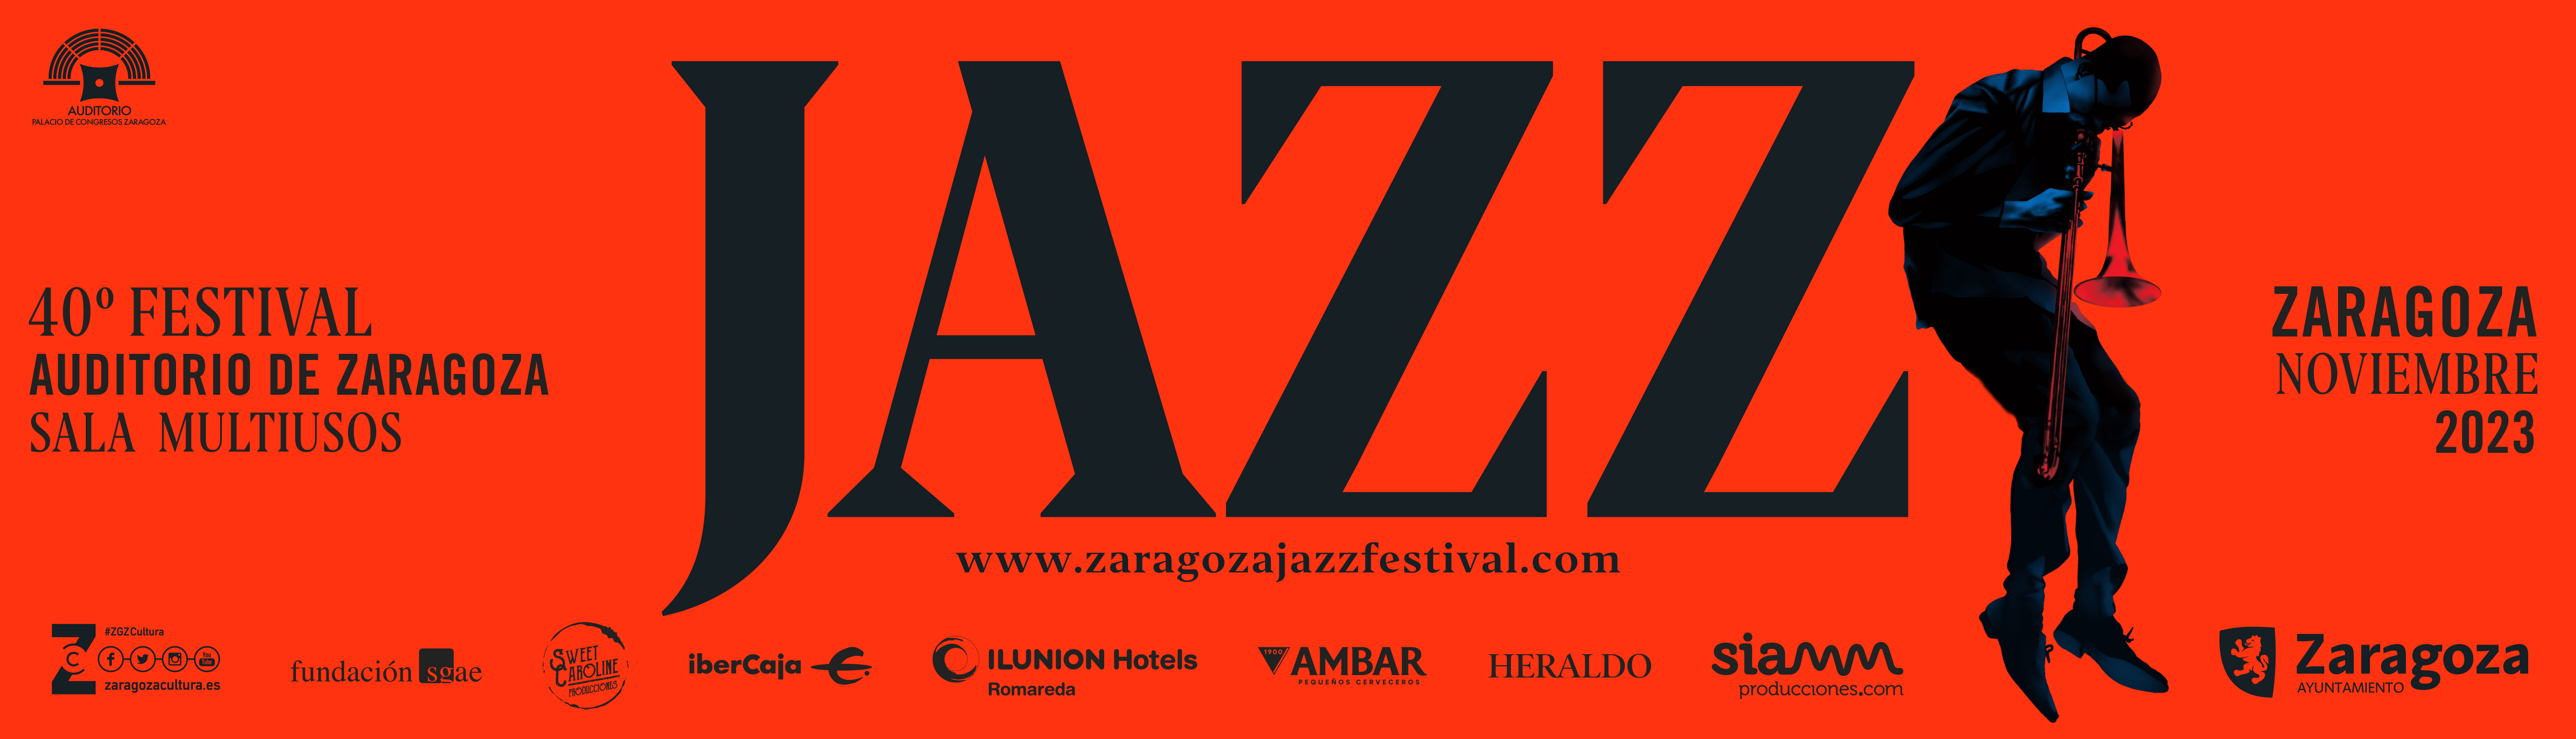 festival de jazz de zaragoza